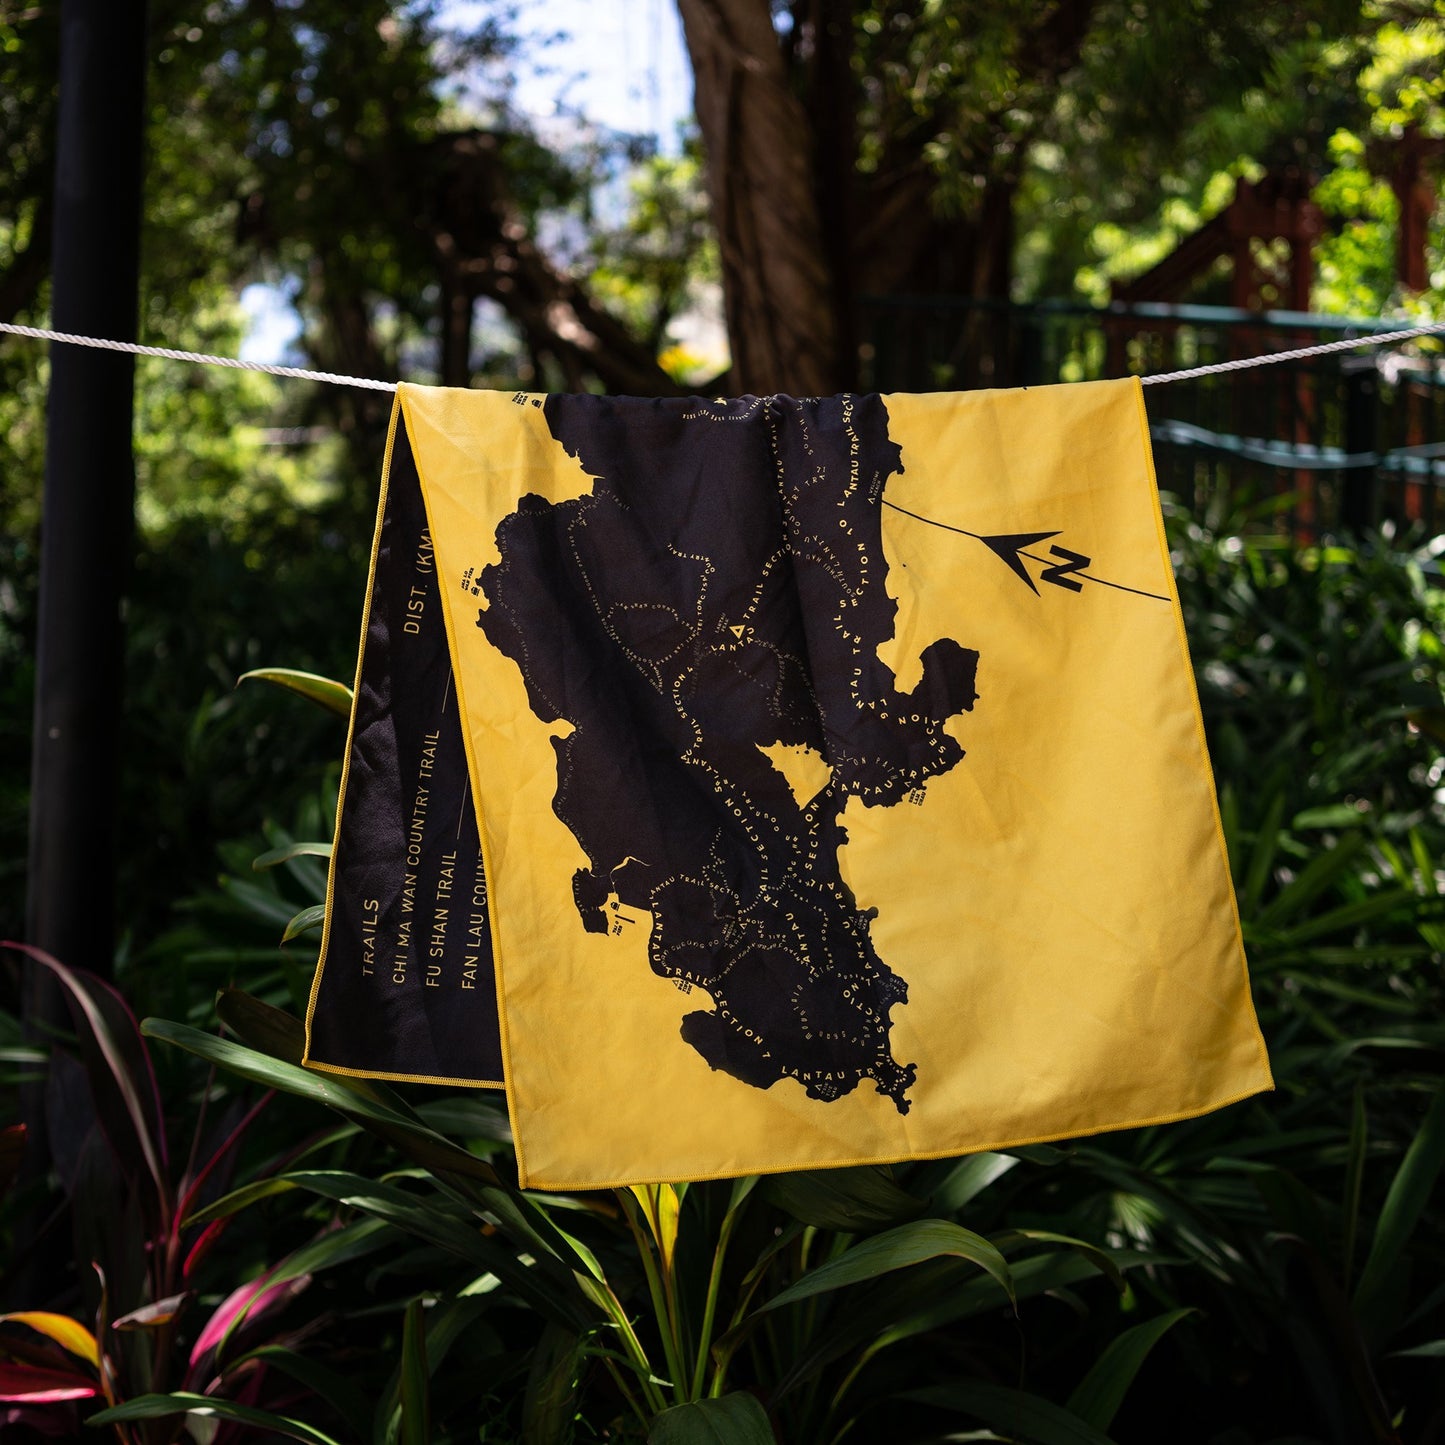 Lantau Sweat Towel Yellow/Black - tinyislandmaps